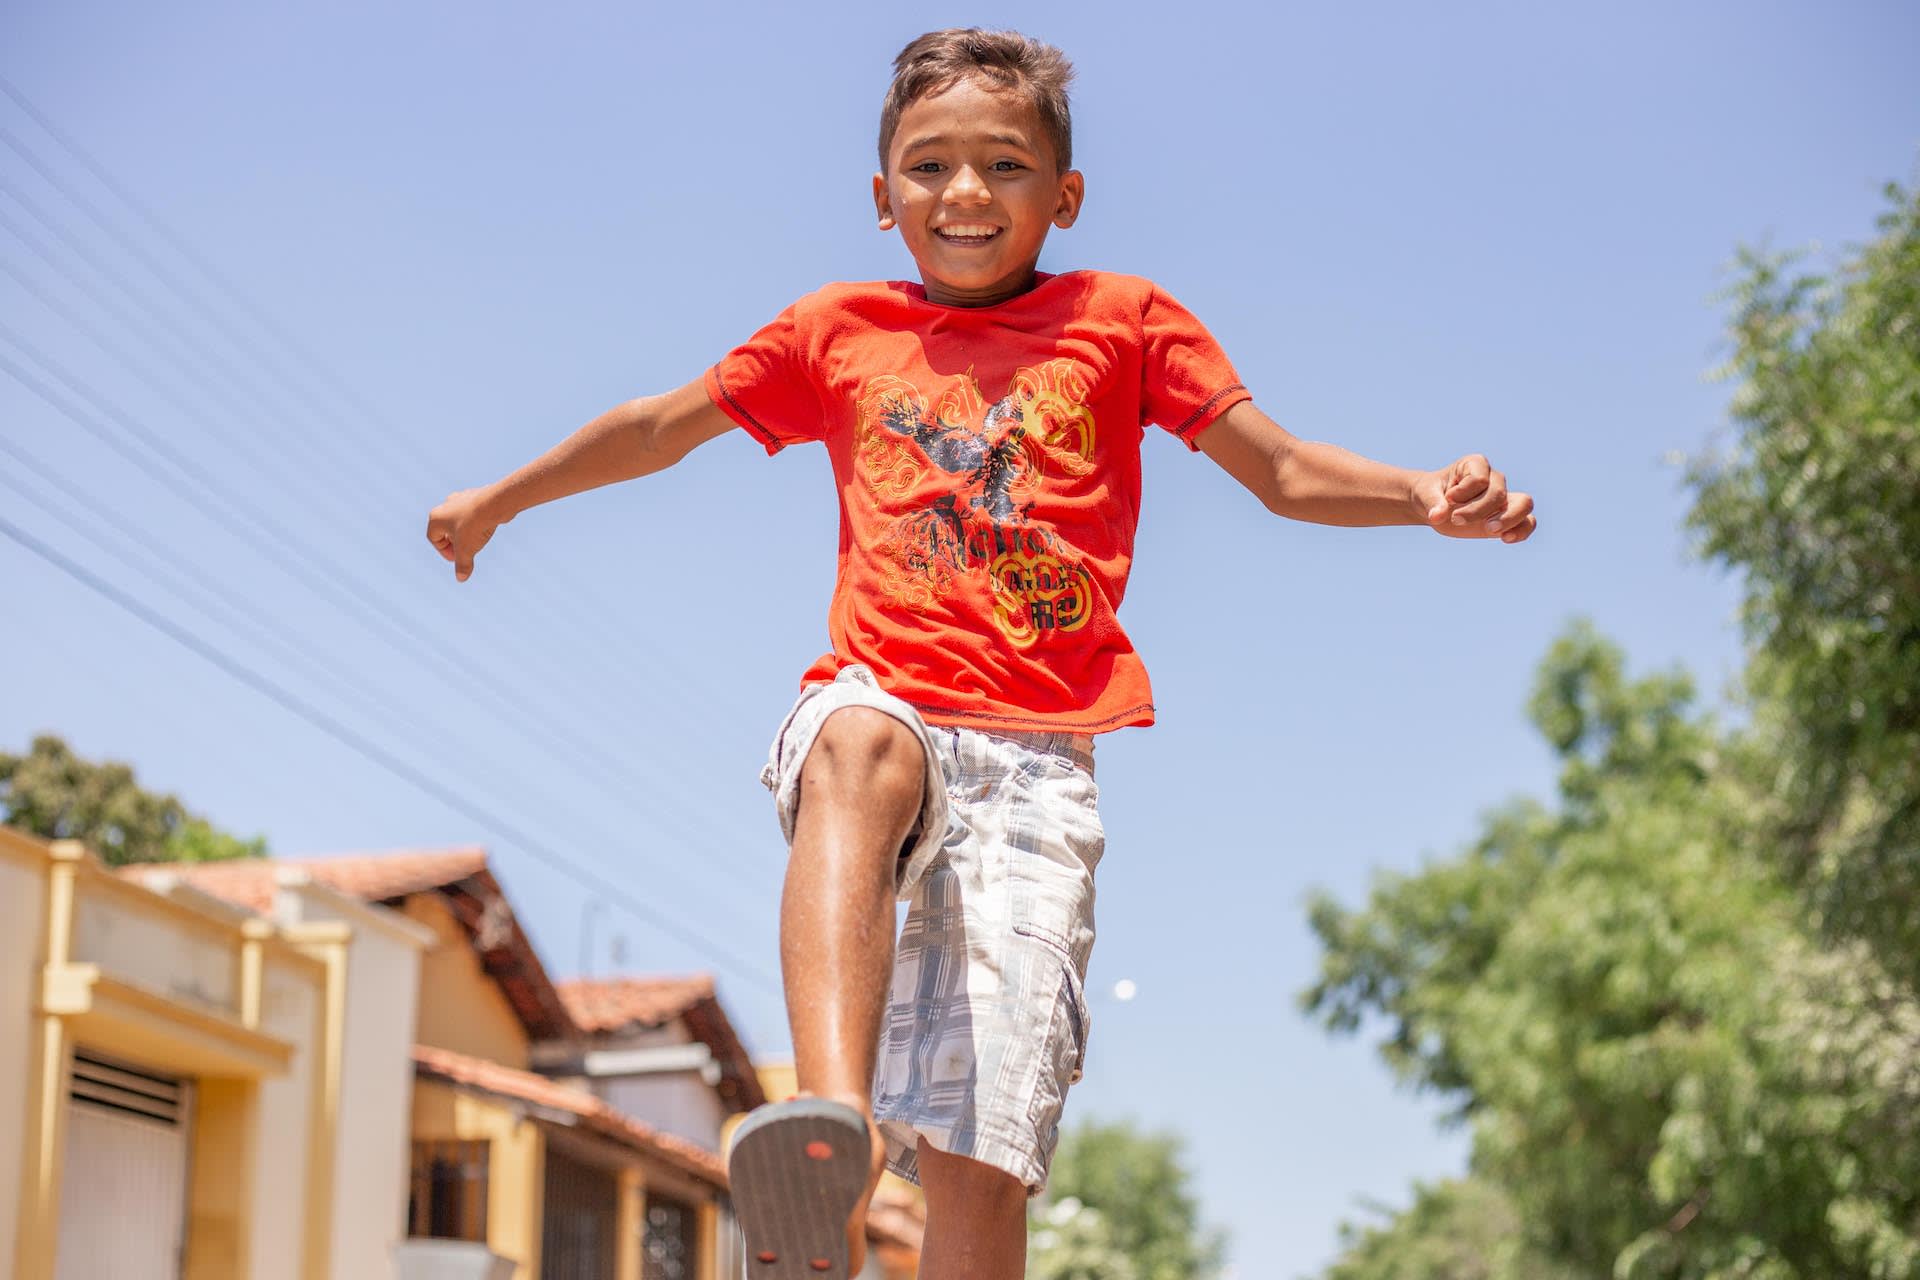 A boy earring an orange shirt and plaid shorts jumping.